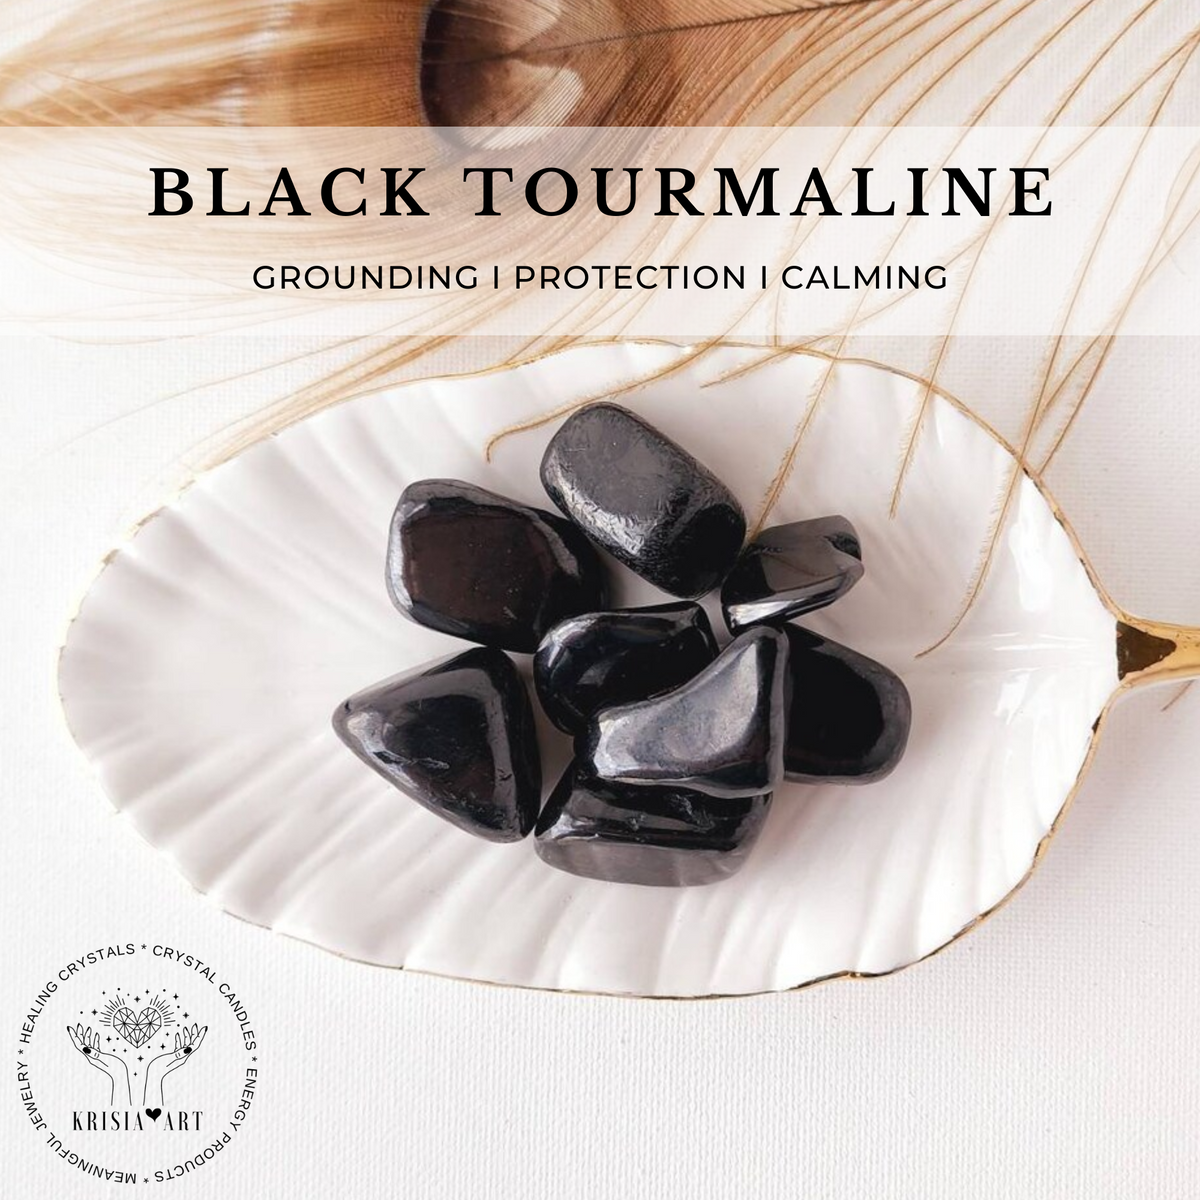 BLACK TOURMALINE tumbled crystal for grounding, protection, calming reiki healing root chakra meditation